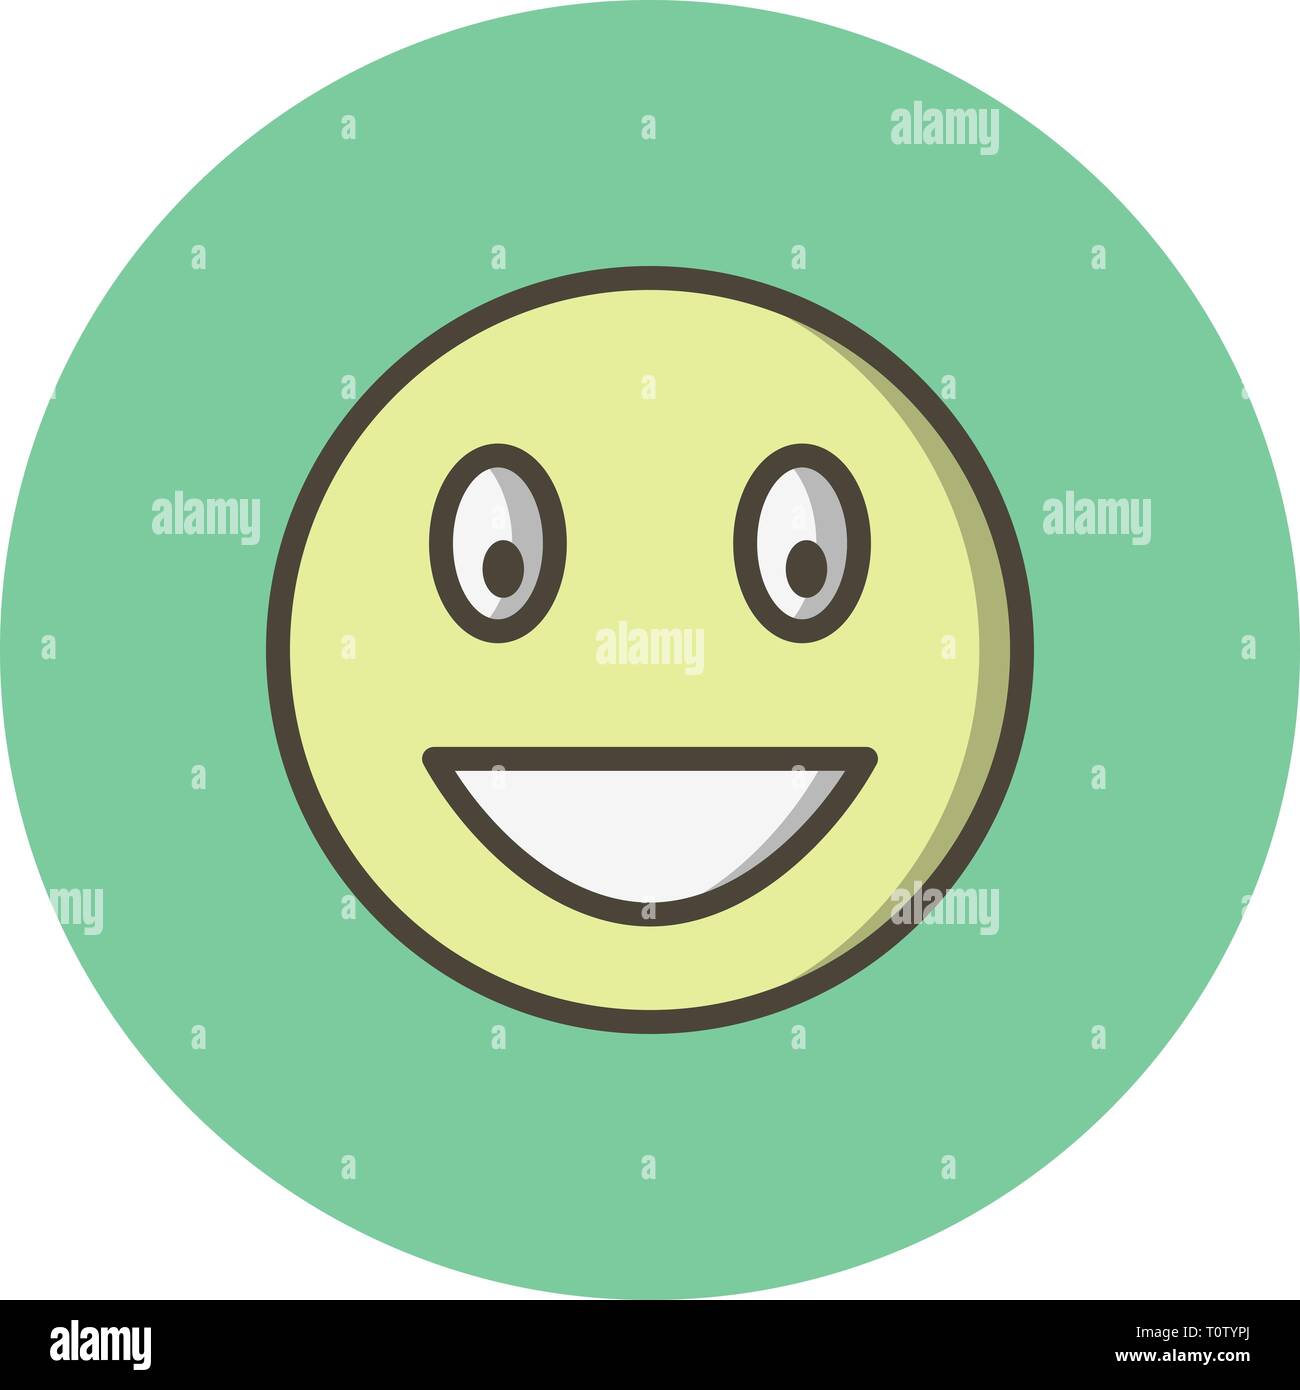 Illustration Laughing Emoji Icon Stock Photo - Alamy